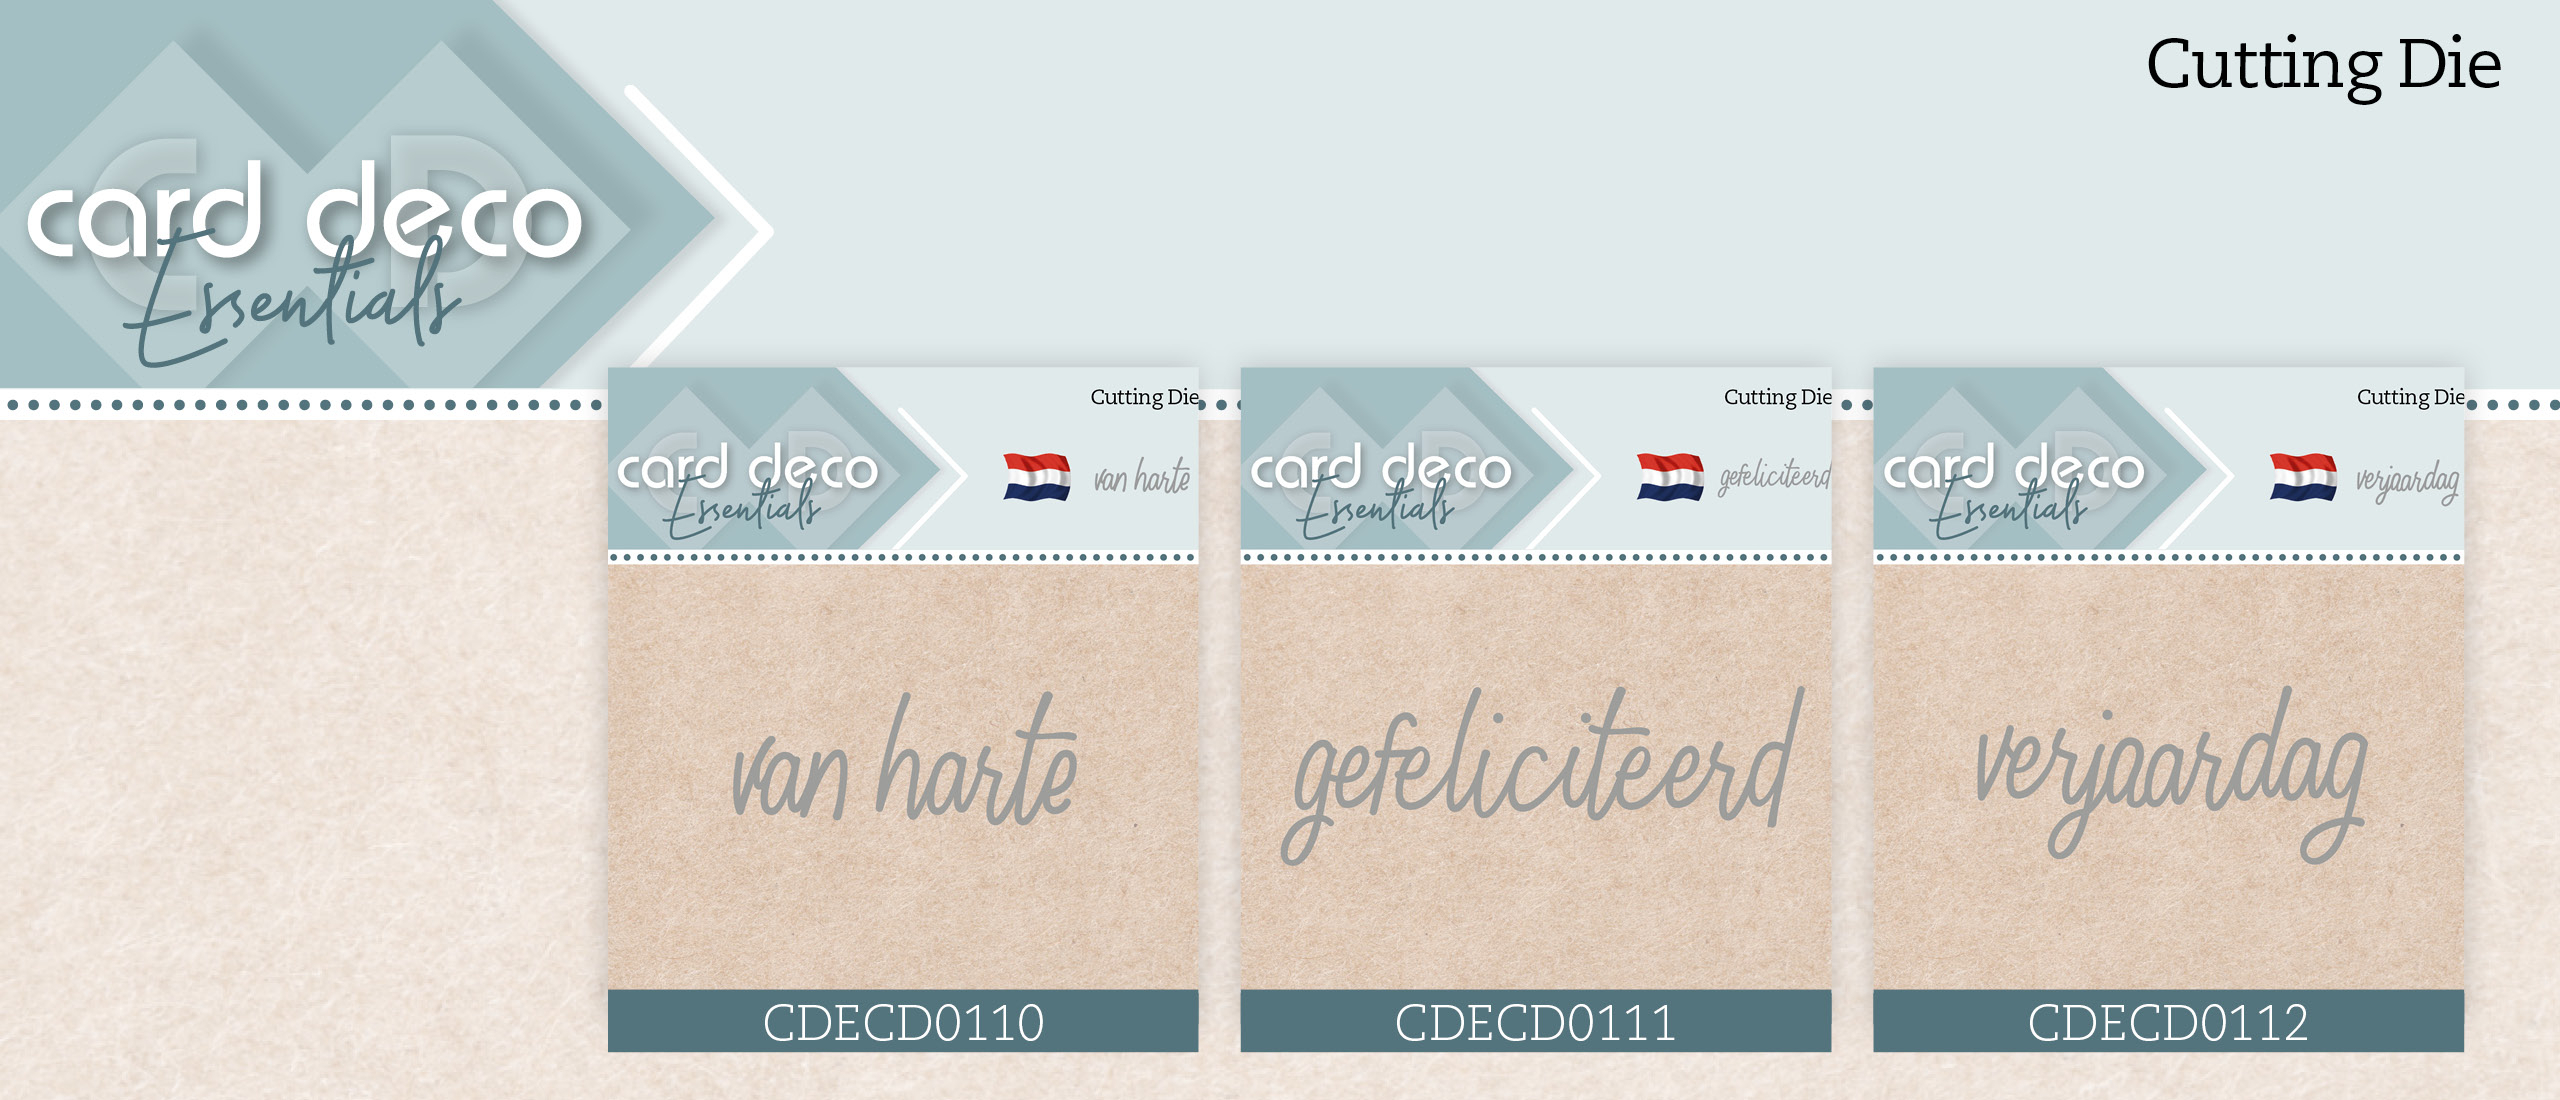 Nieuwe tekst Dies van Card Deco Essentials (CDECD0110 t/m CDECD0112)